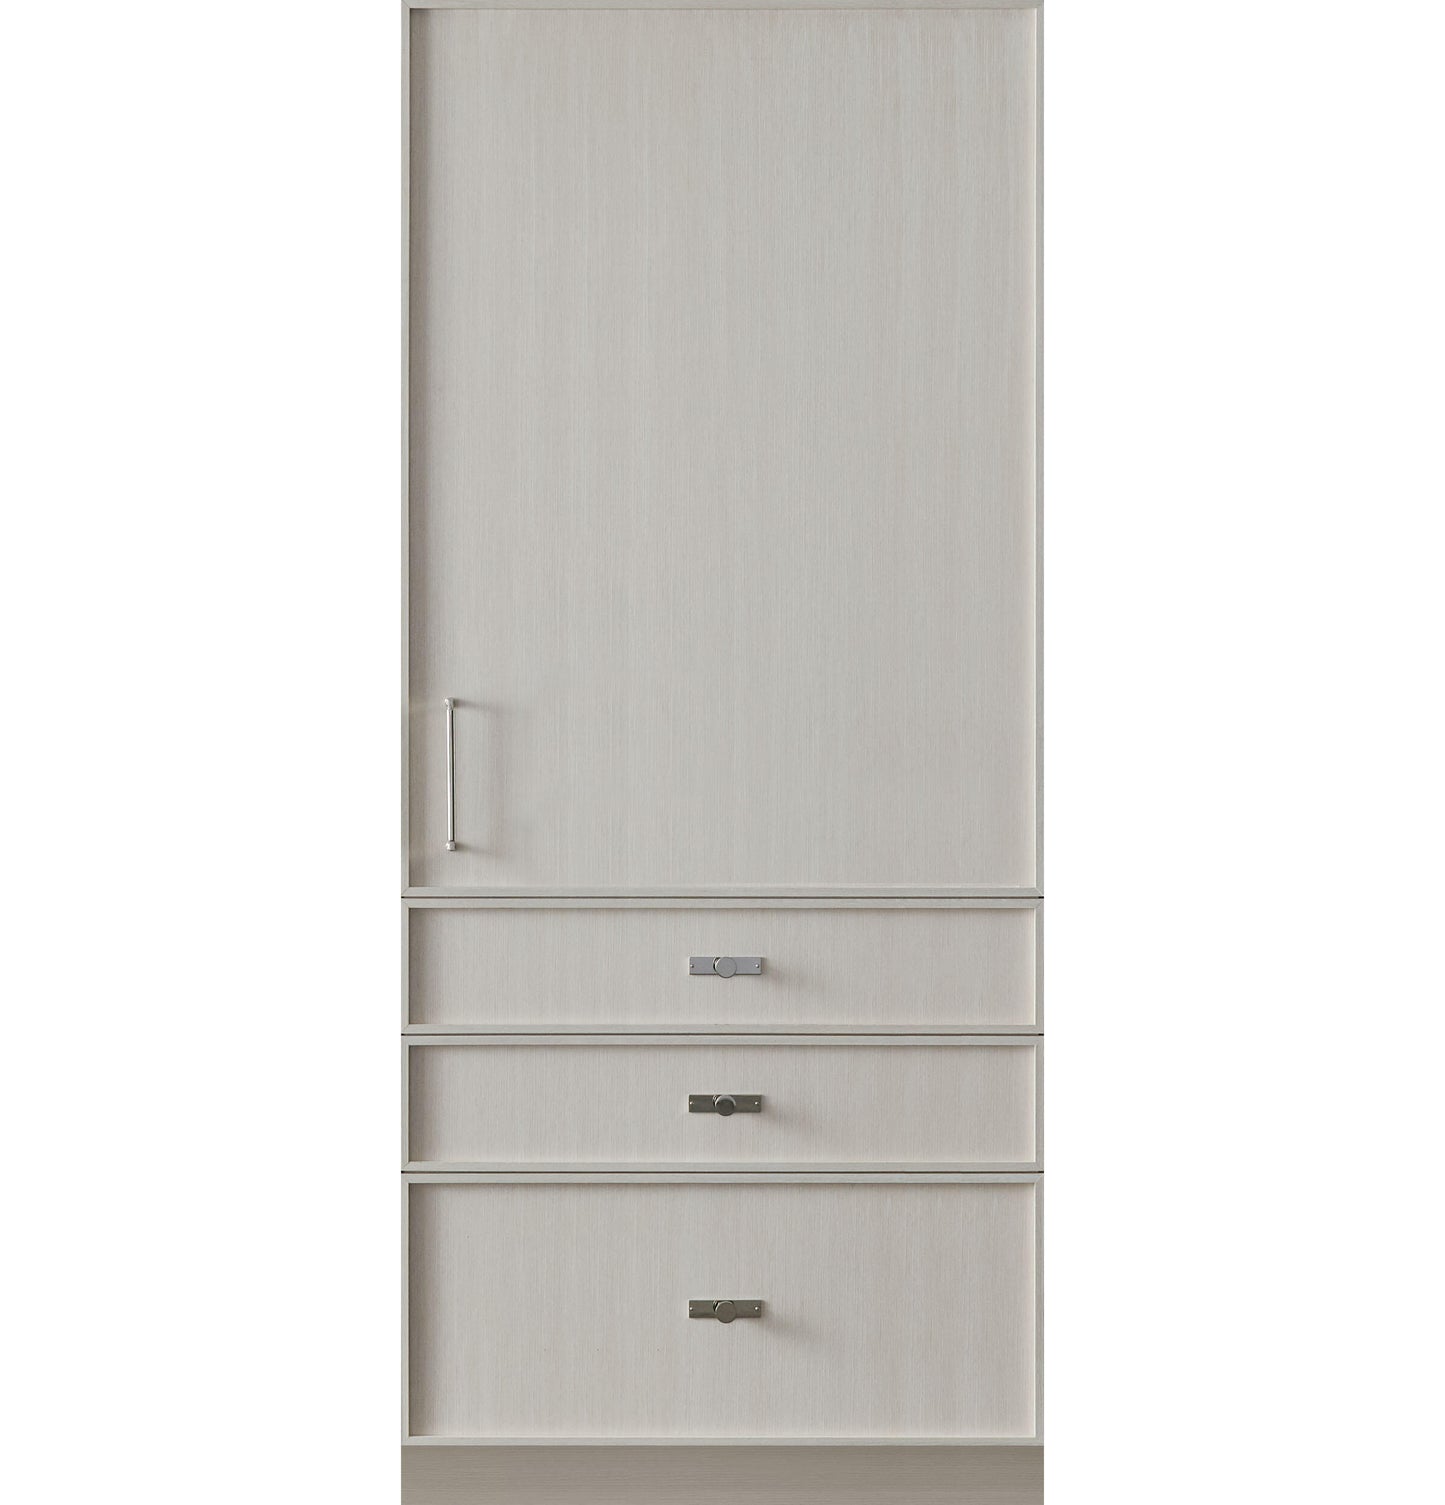 Monogram ZIR361NPRII Monogram 36" Integrated Column Refrigerator